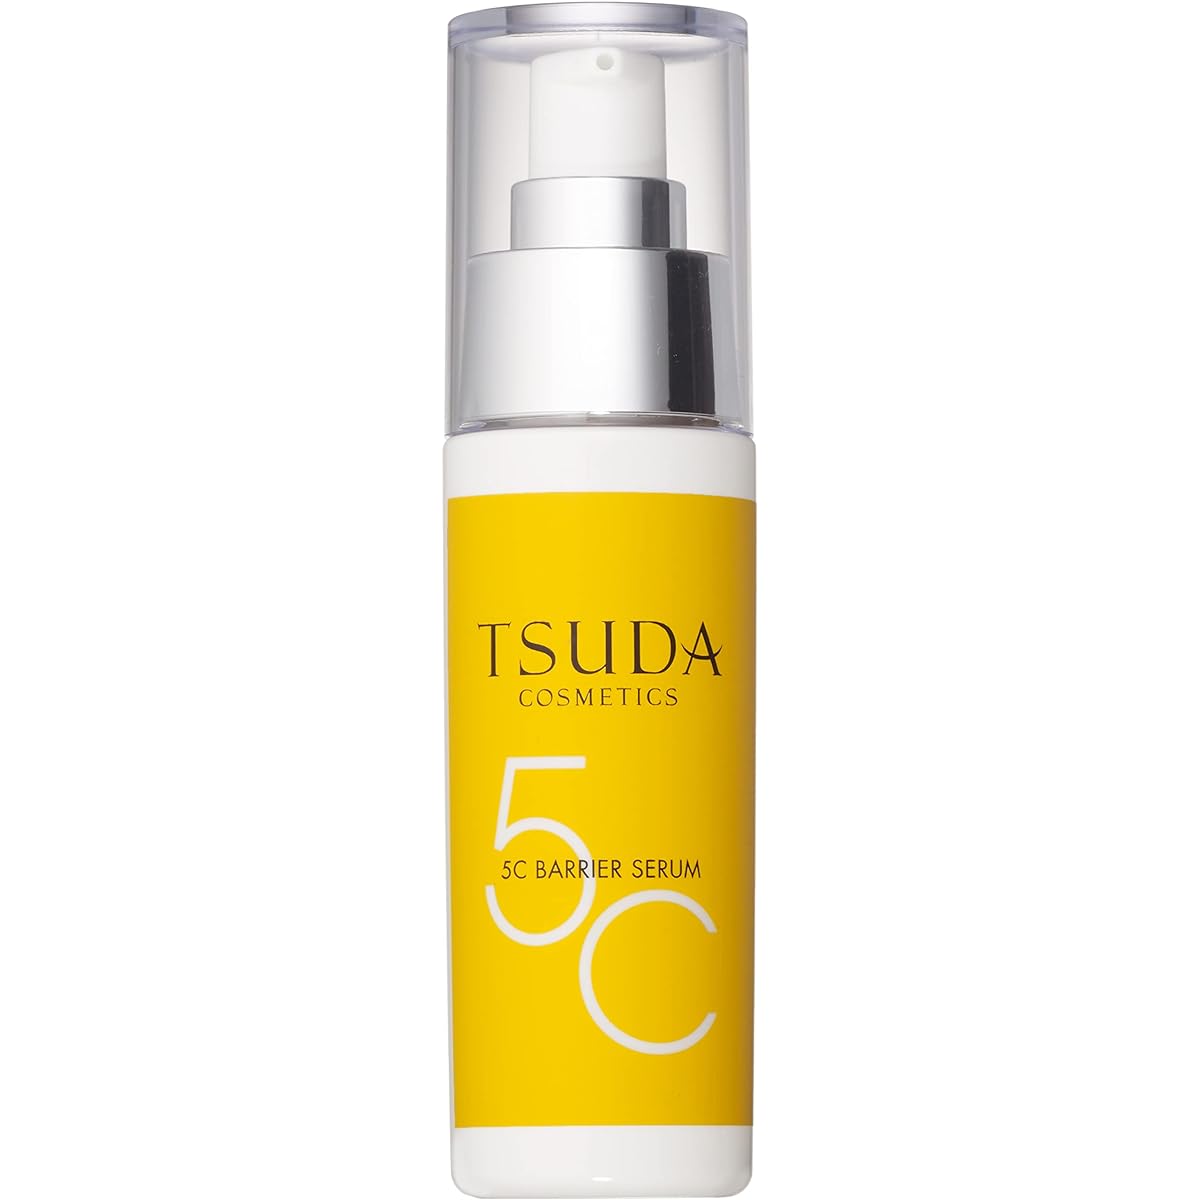 TSUDA COSMETICS 5C Barrier Serum Essence Sensitive Skin 45ml